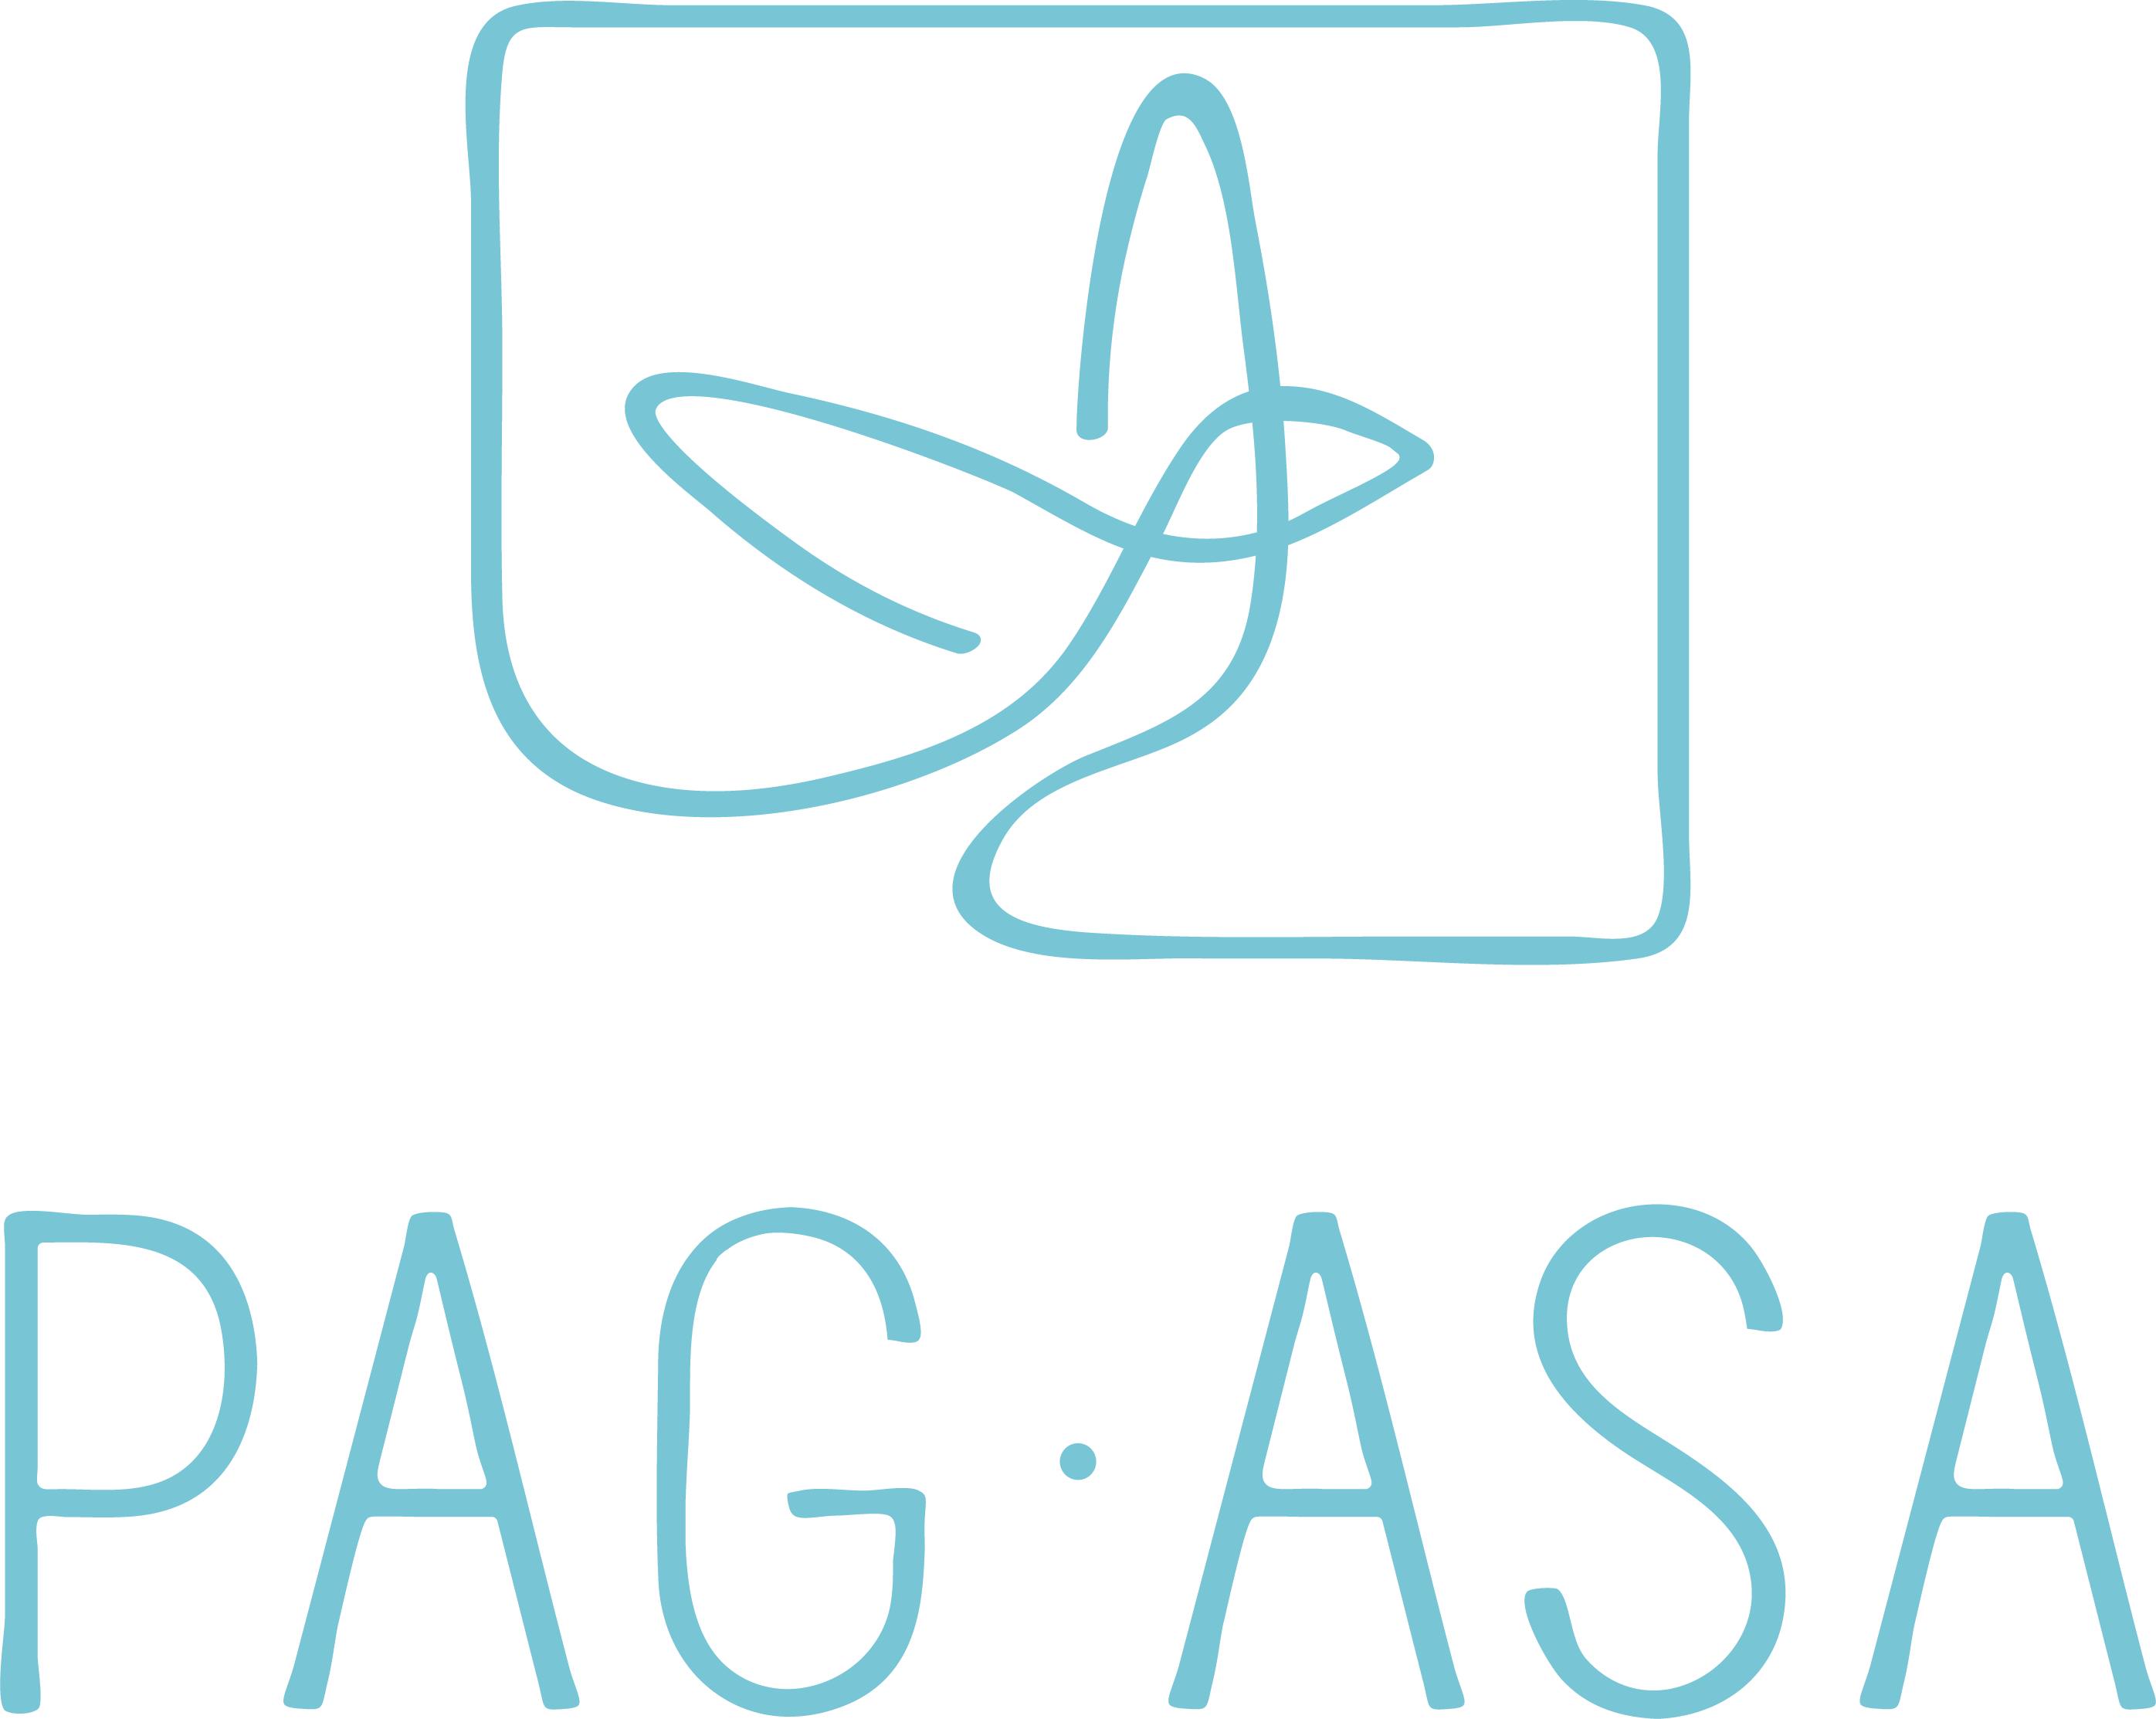 PAG-ASA